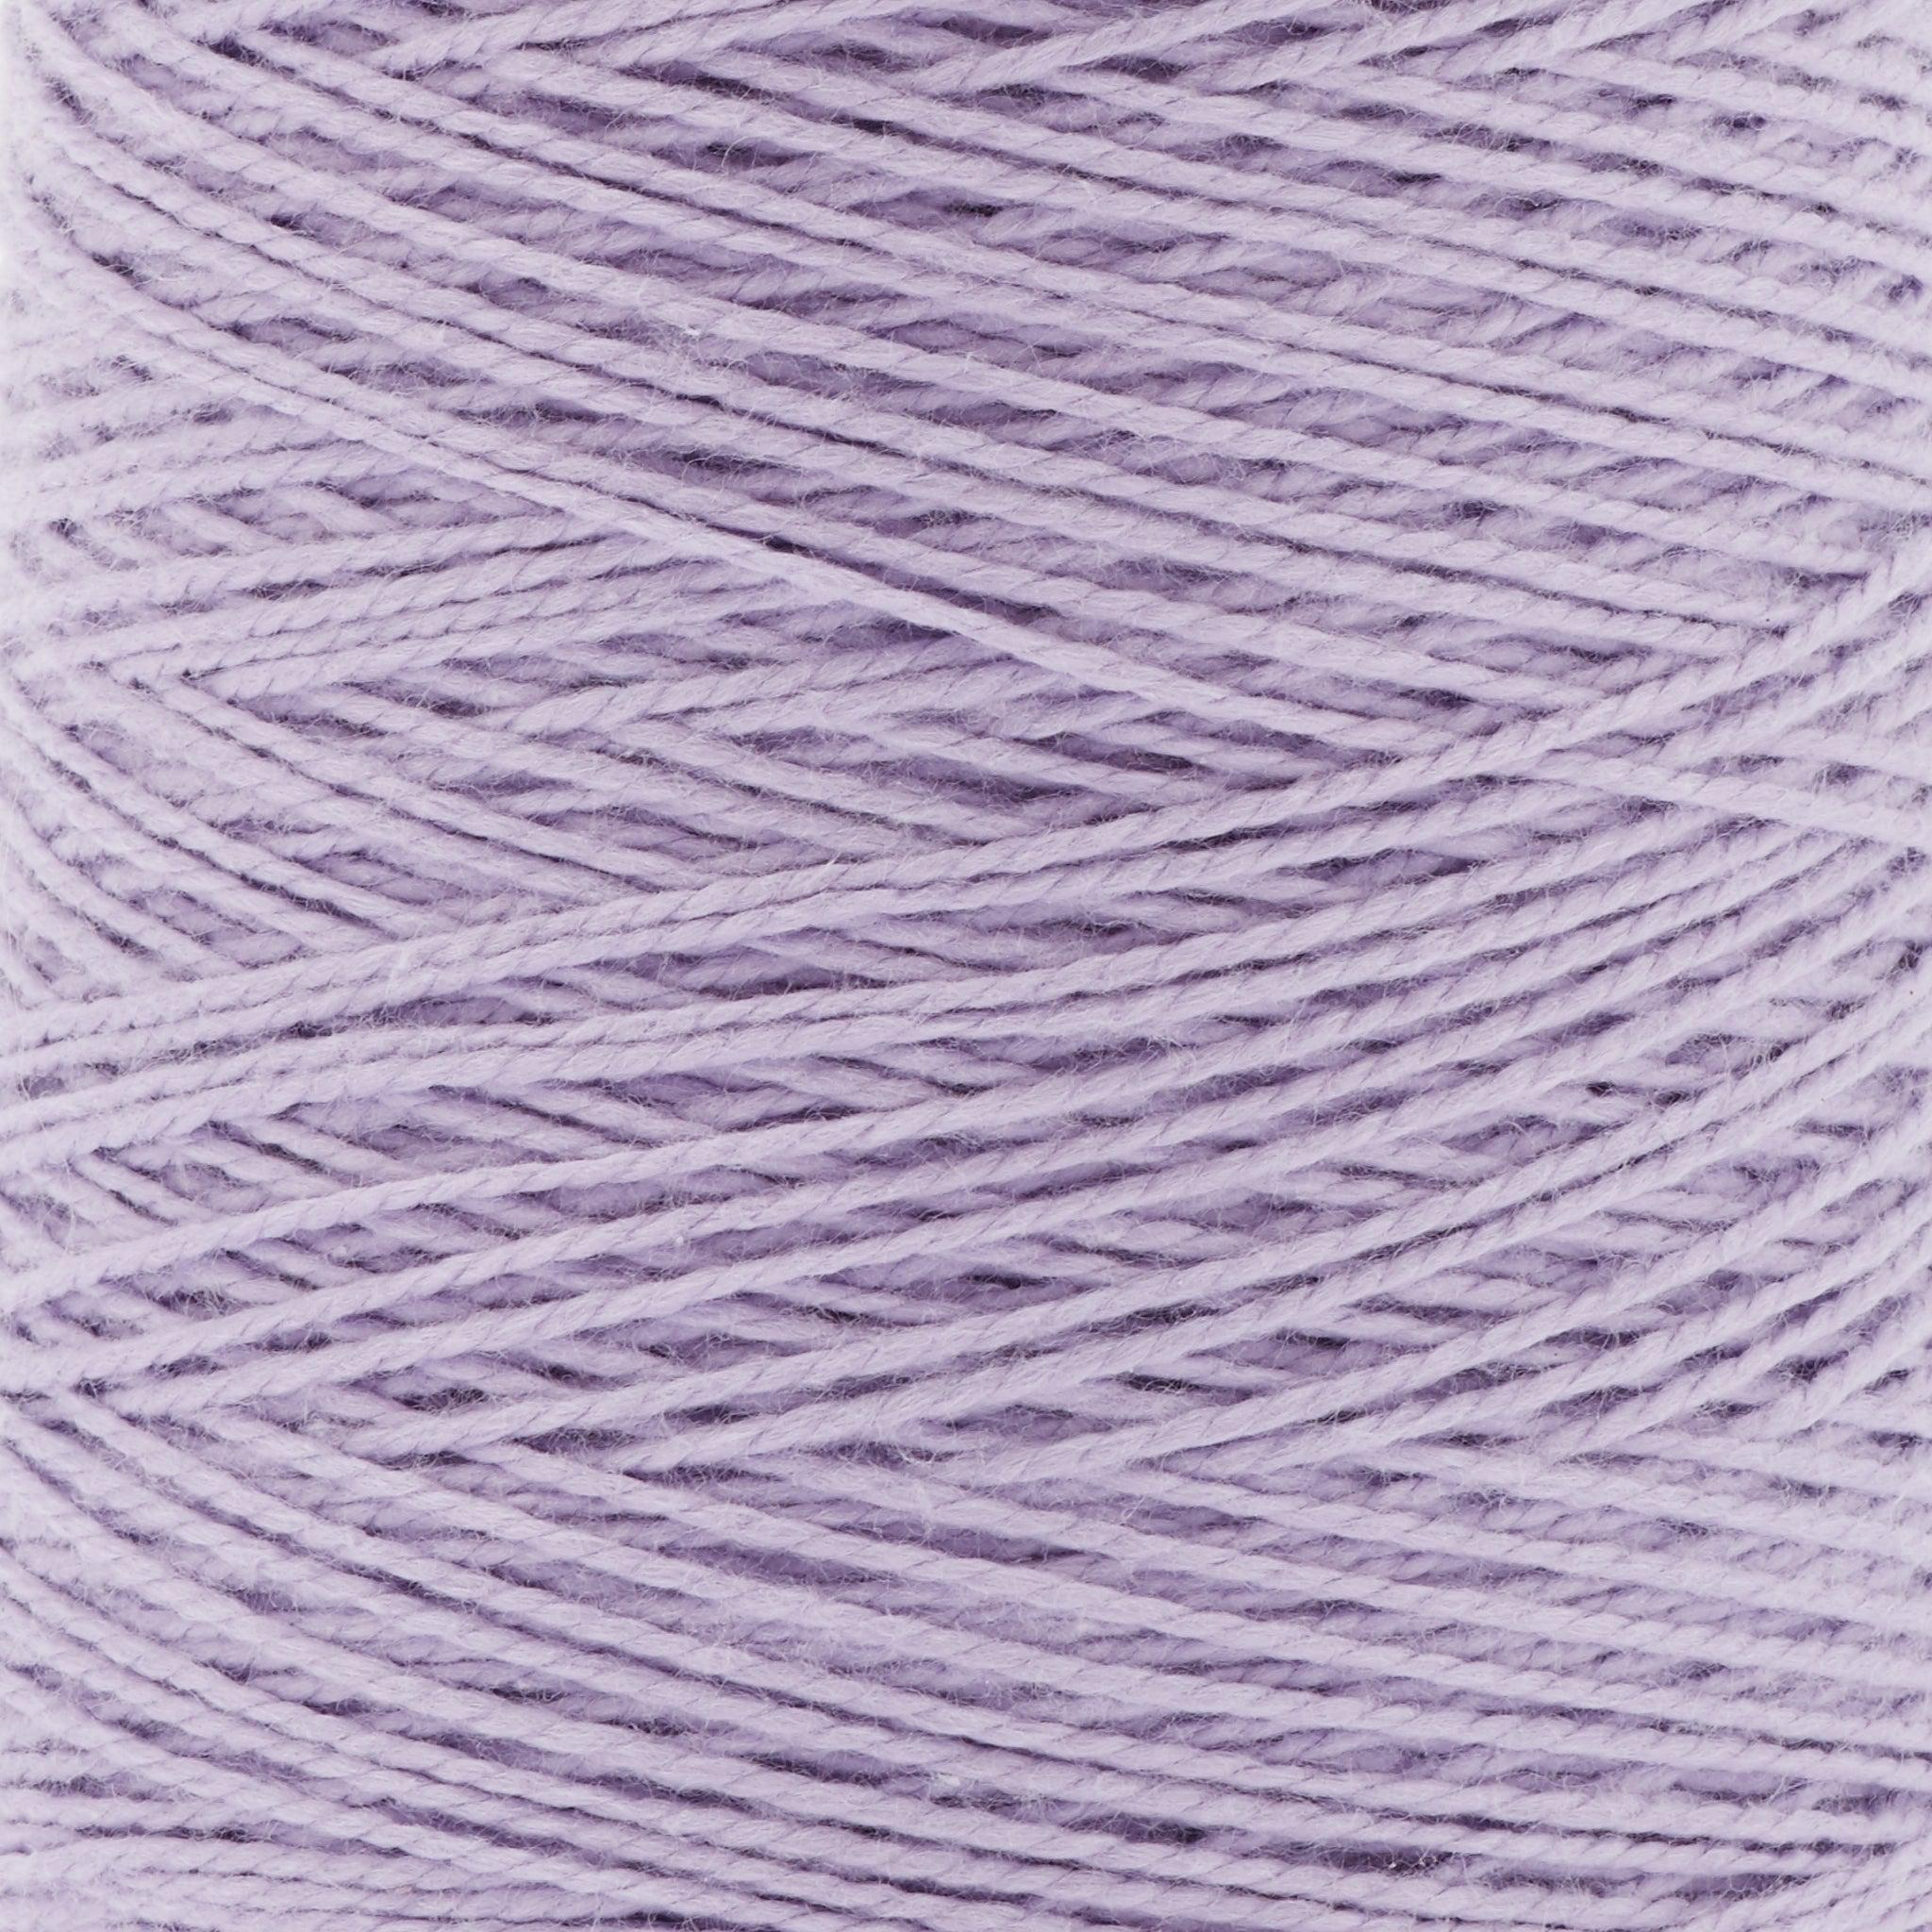 Beam 3/2 Organic Cotton Weaving Yarn - Gist Yarn